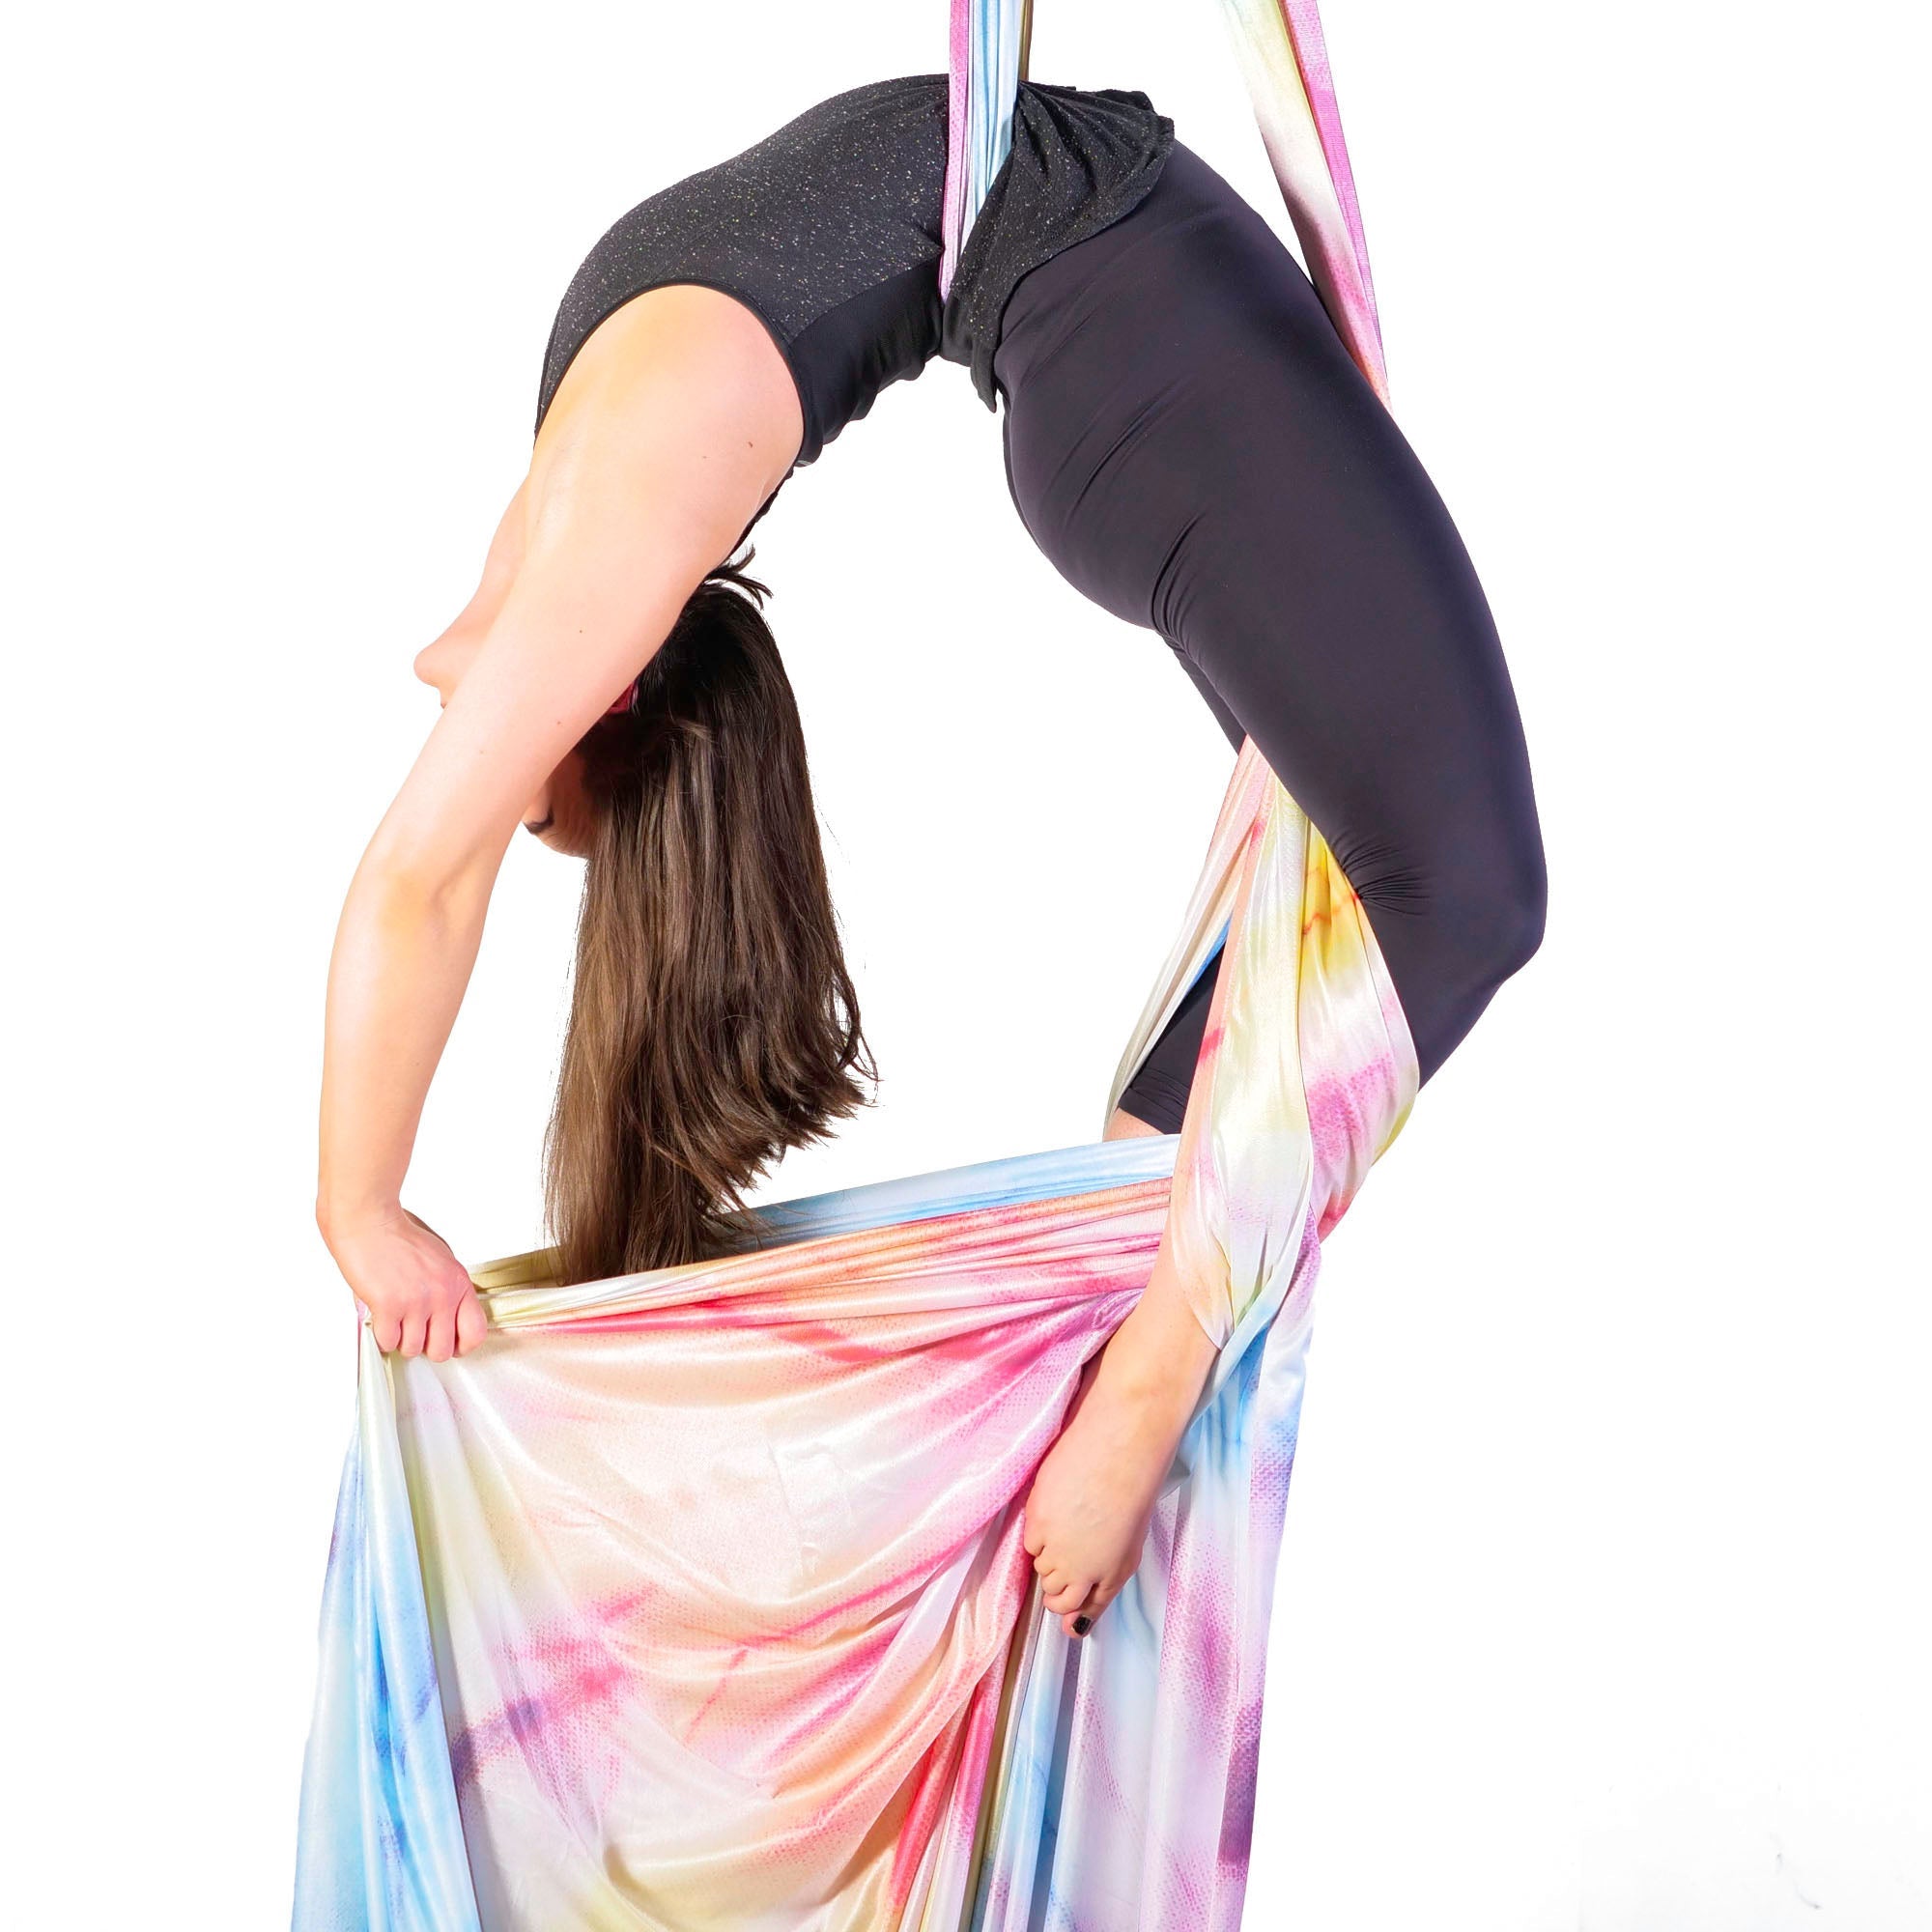 performer using multicoloured silks